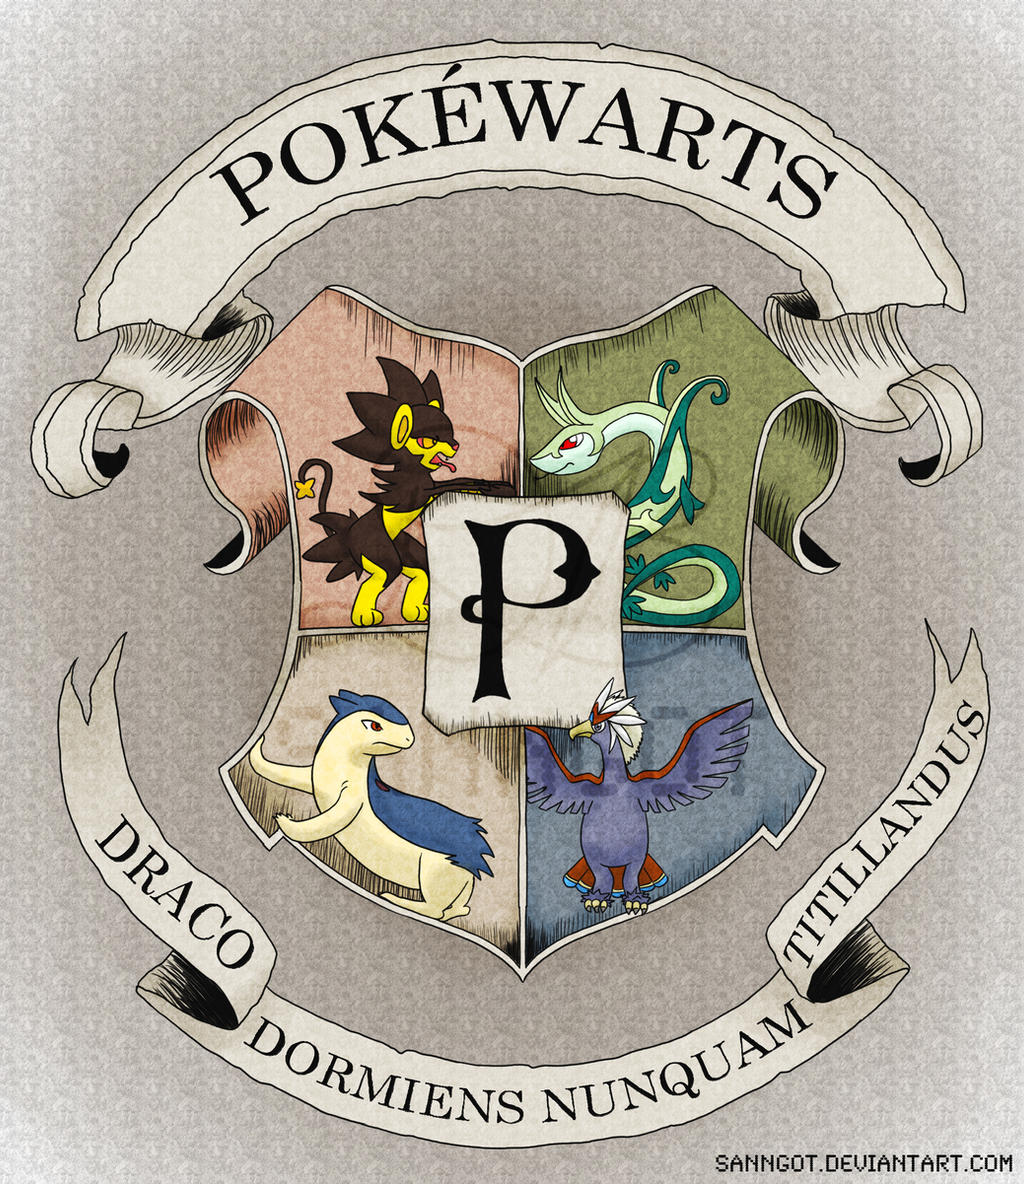 Pokewarts